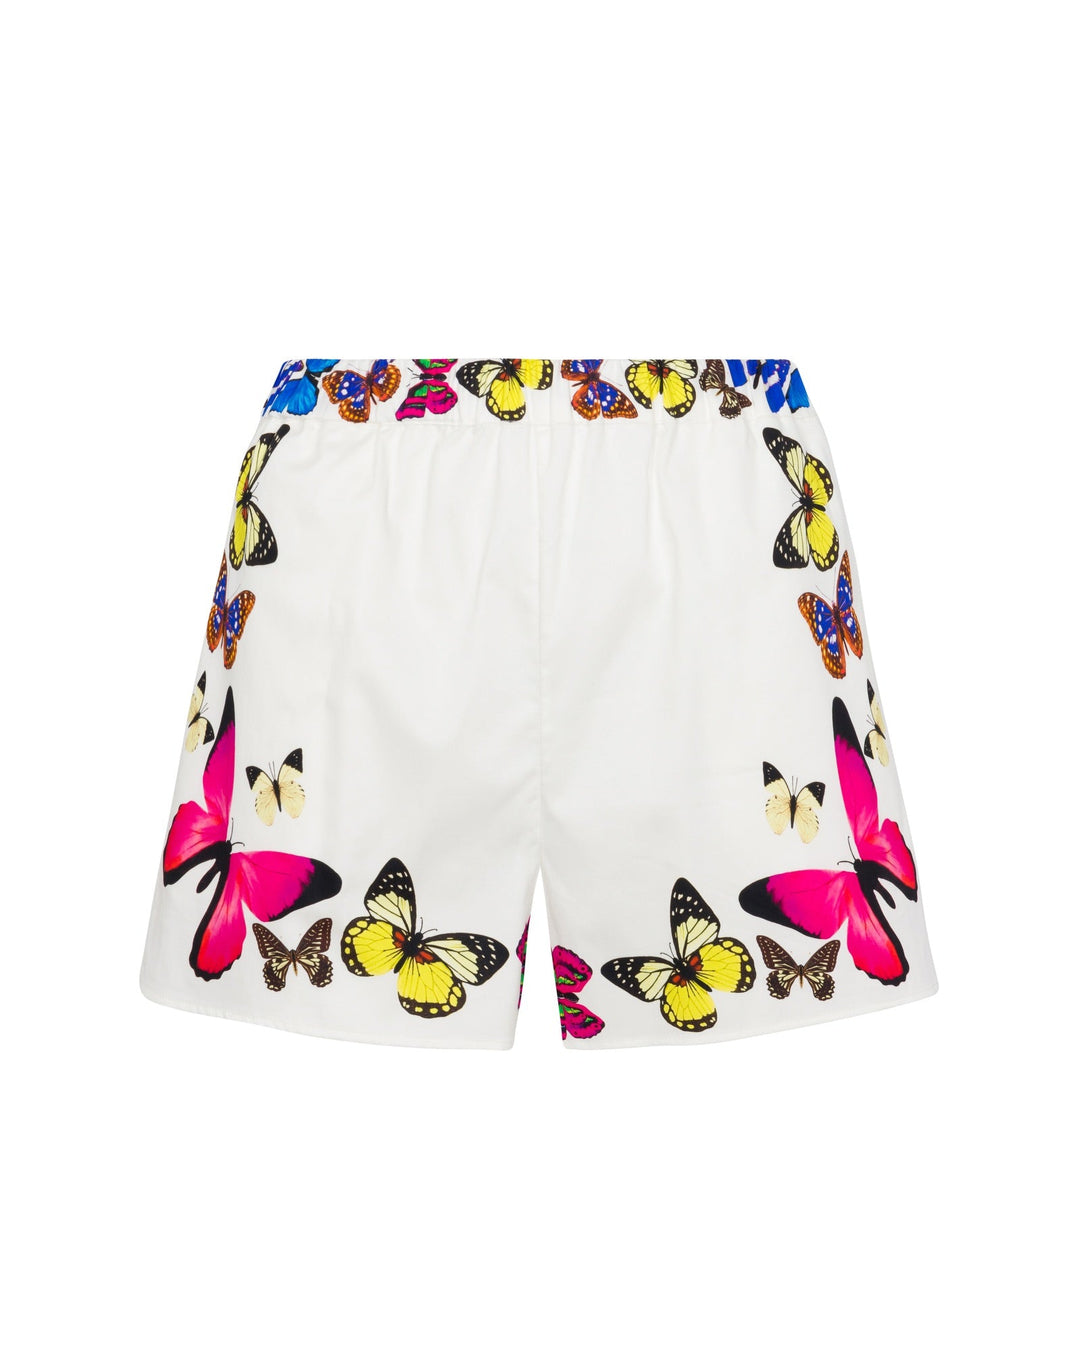 The Mariposa Shorts by Meghan Fabulous